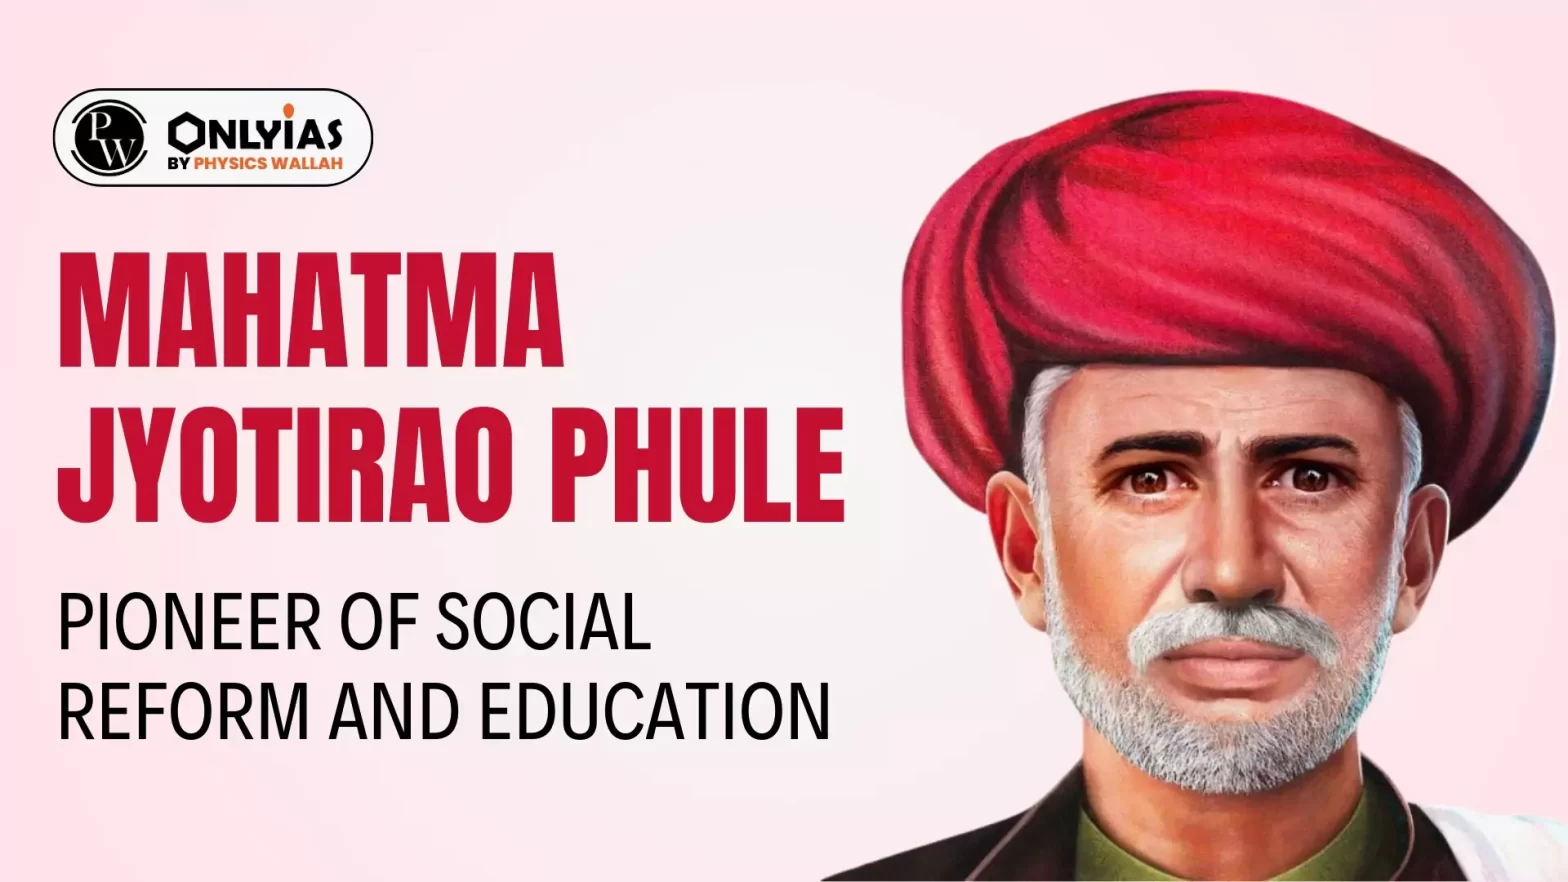 Mahatma Jyotirao Phule: Pioneer of Social Reform and Education